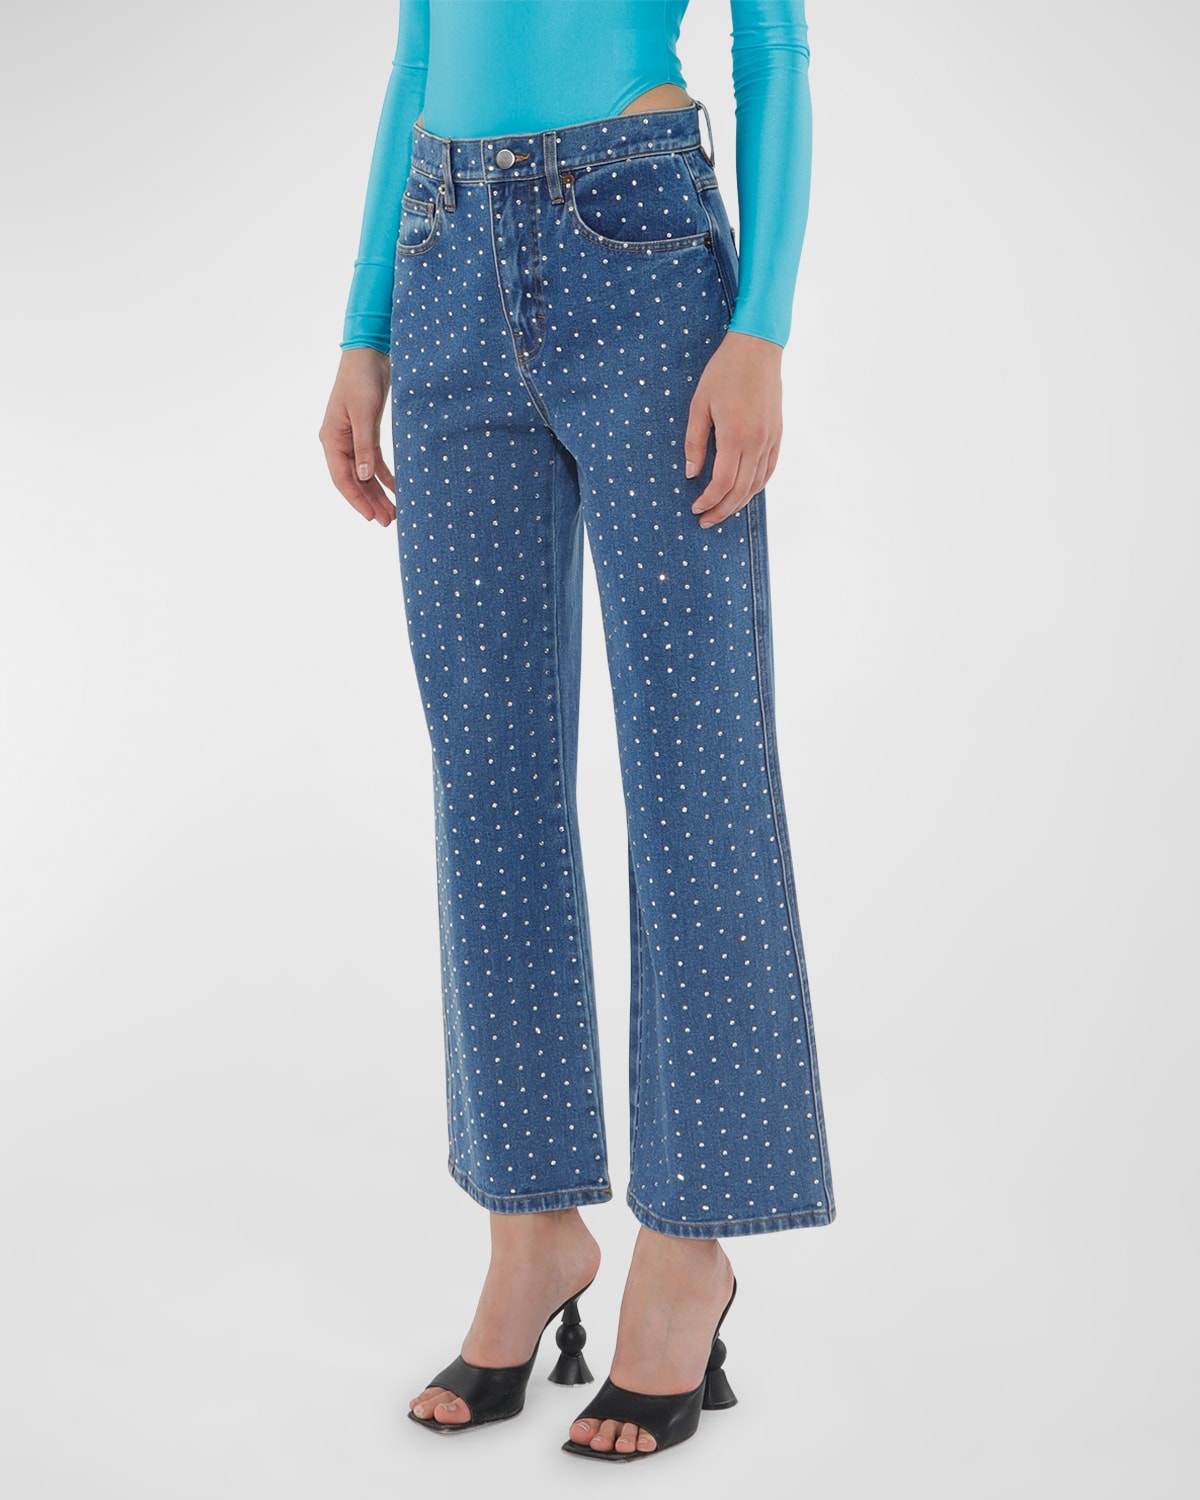 Cropped Rhinestone-Embellished Jeans